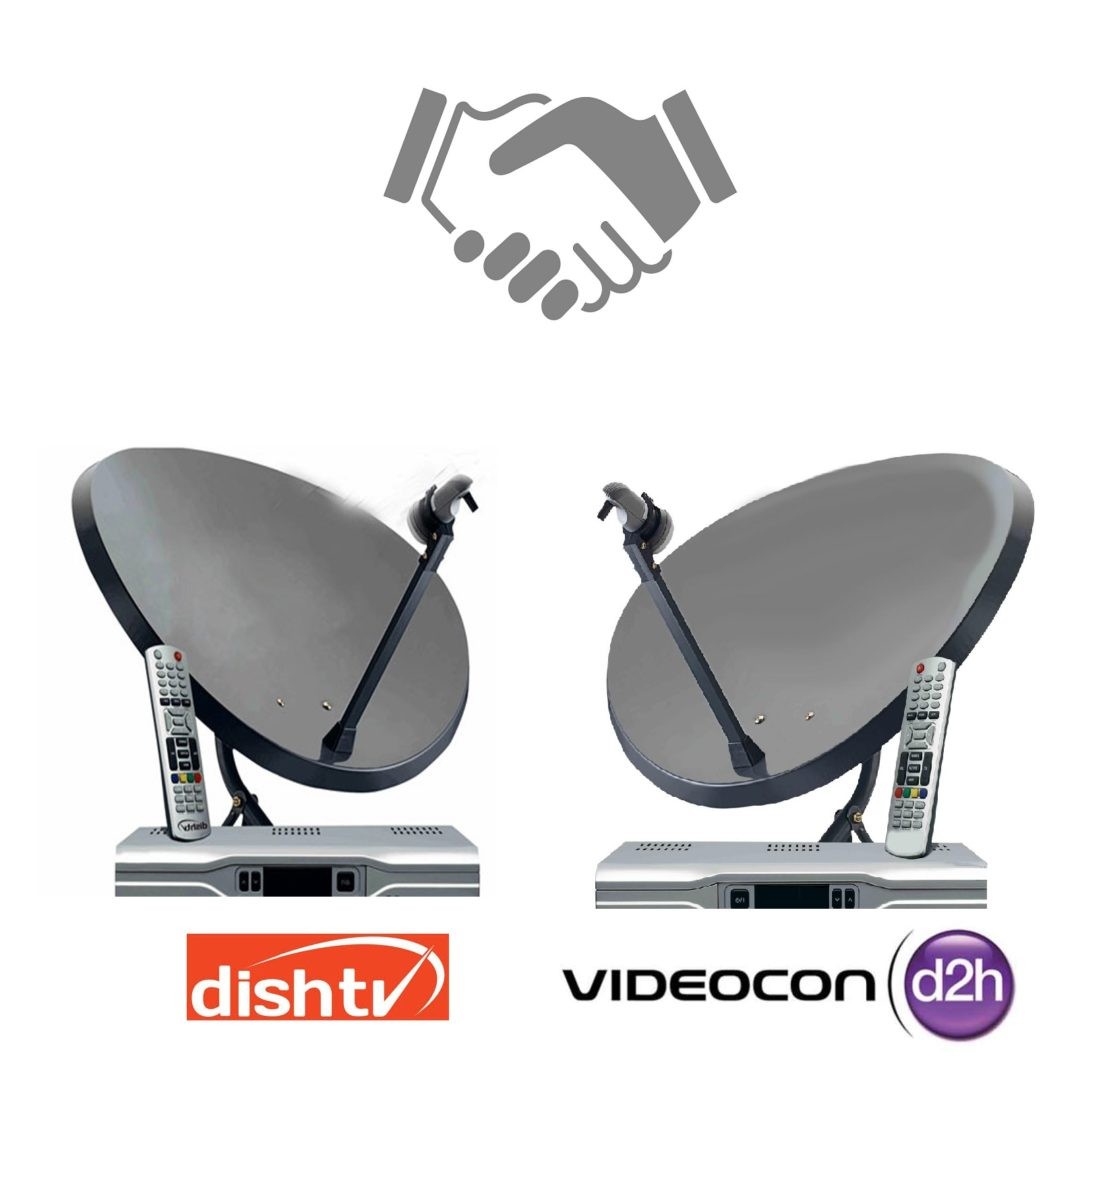 SWOT Analysis of Dish TV - Videocon & Dish TV Merged